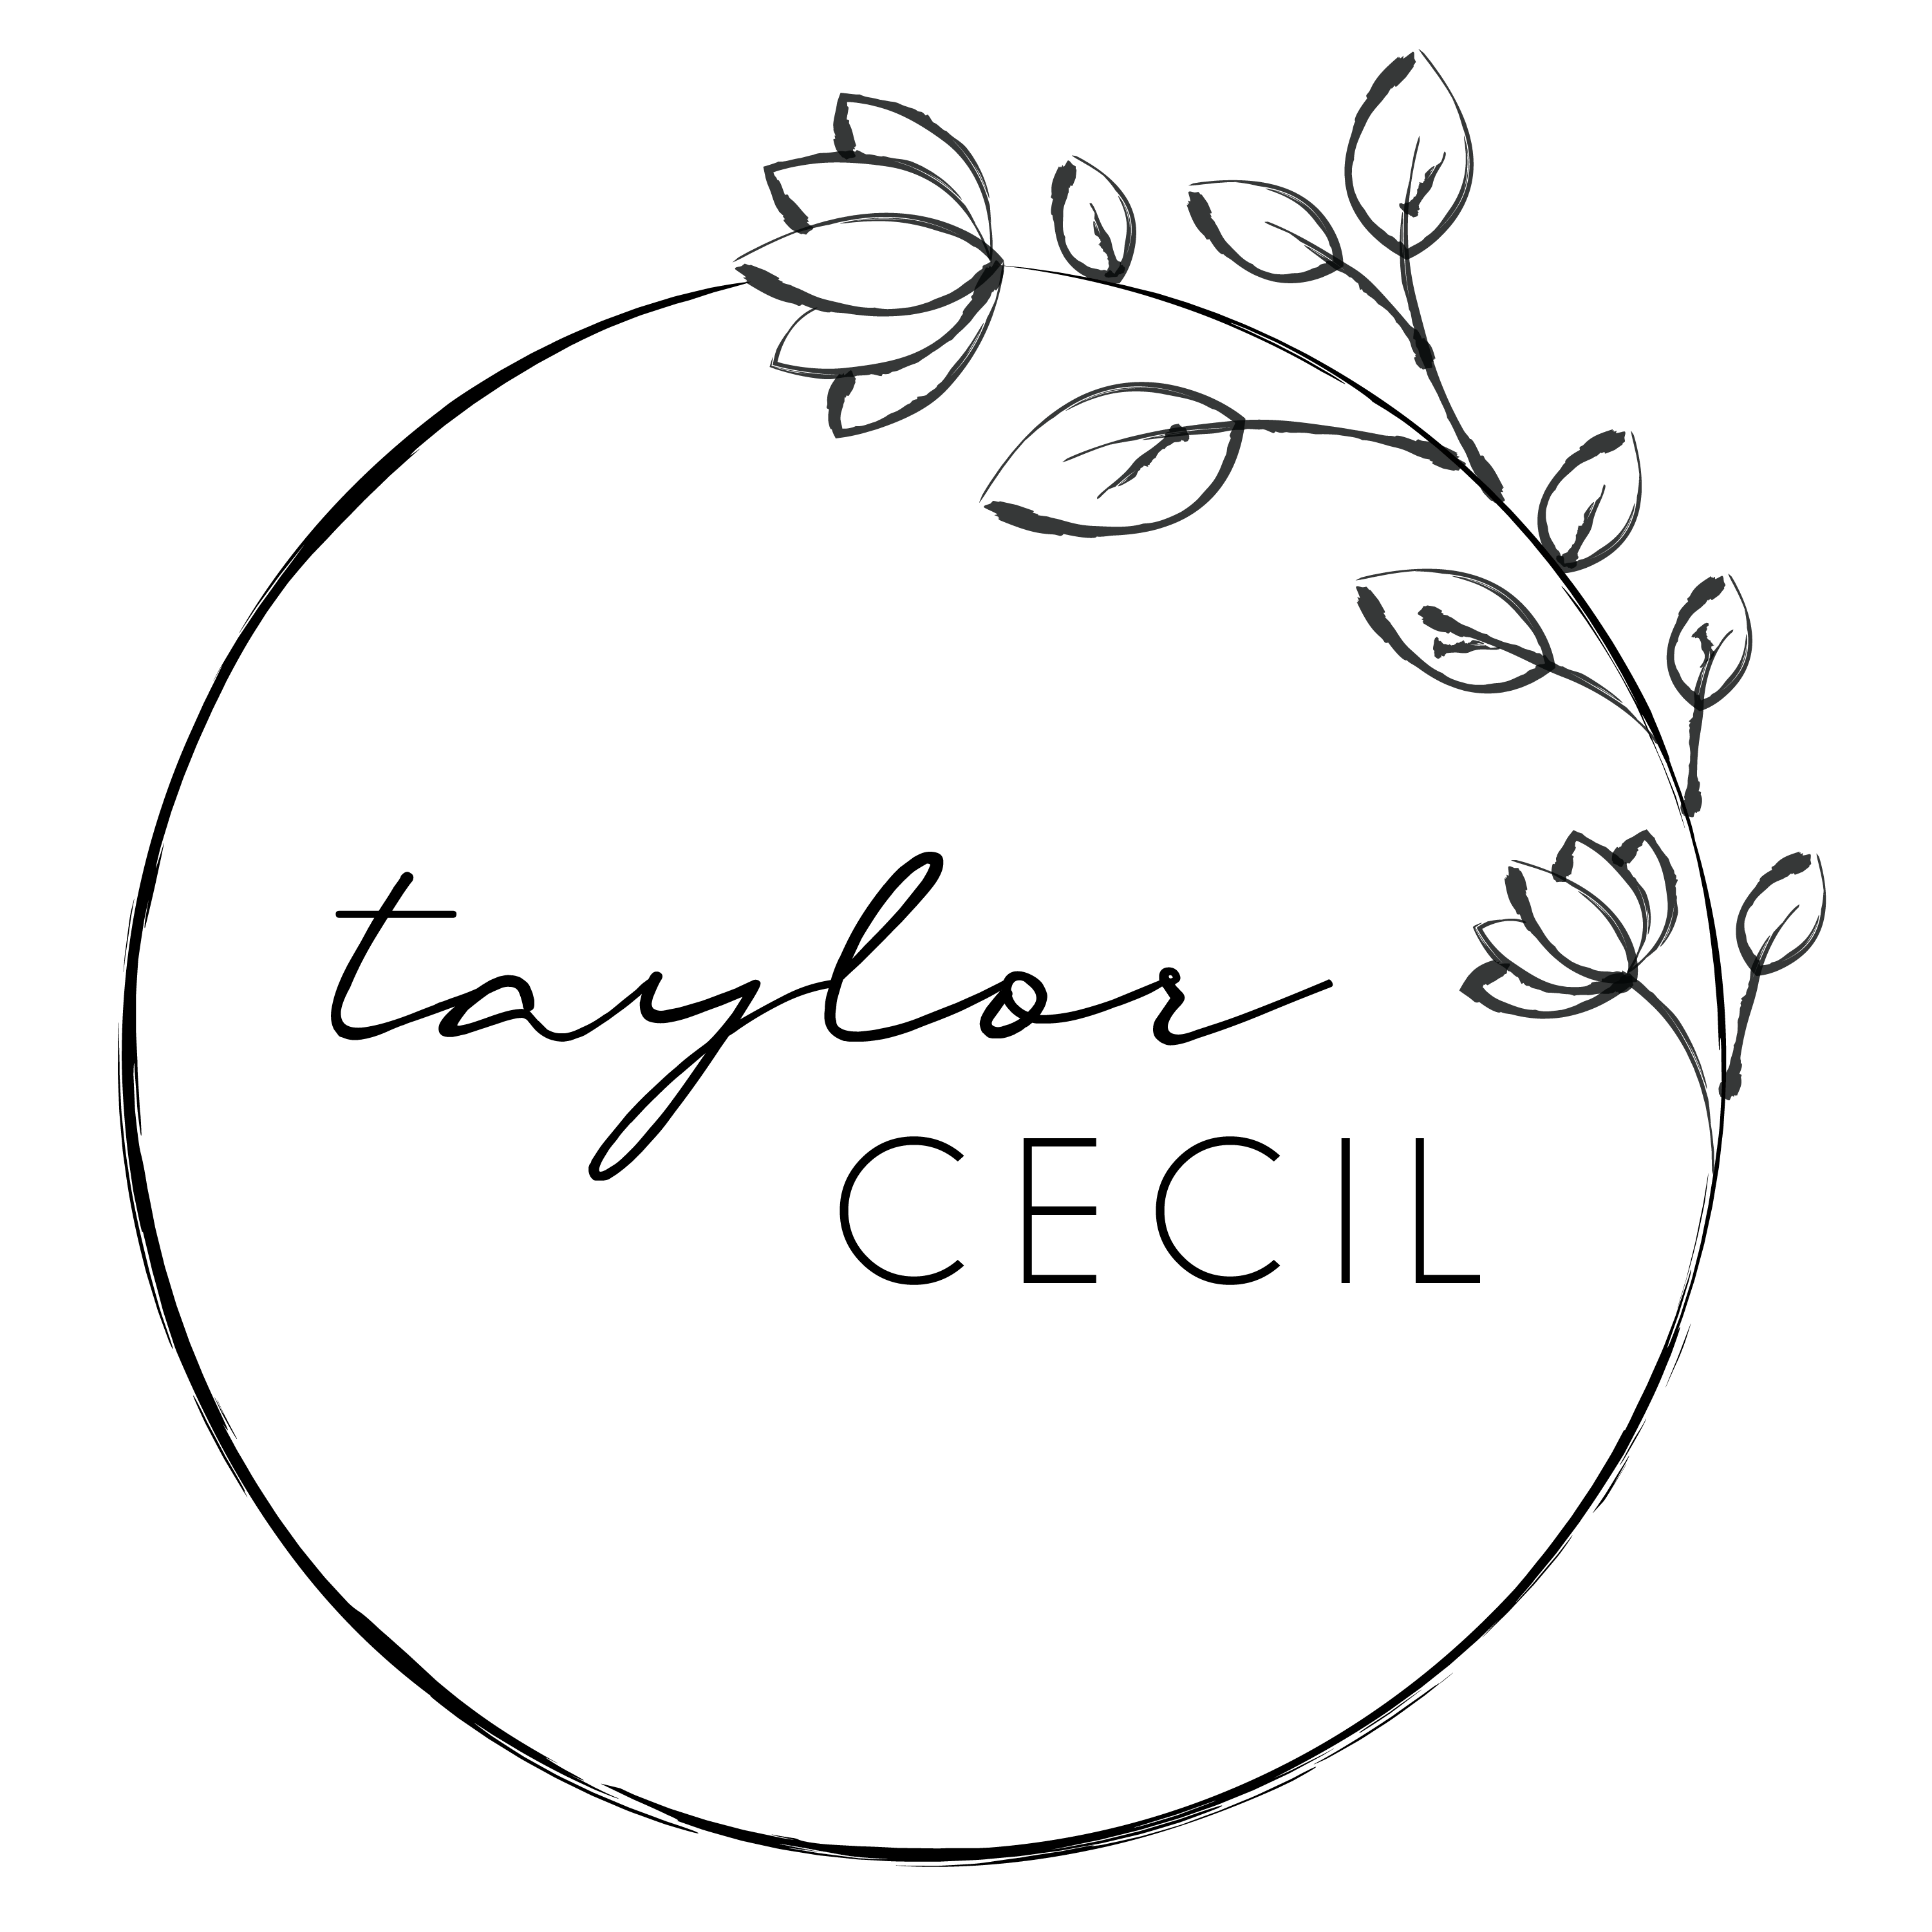 Taylor Cecil